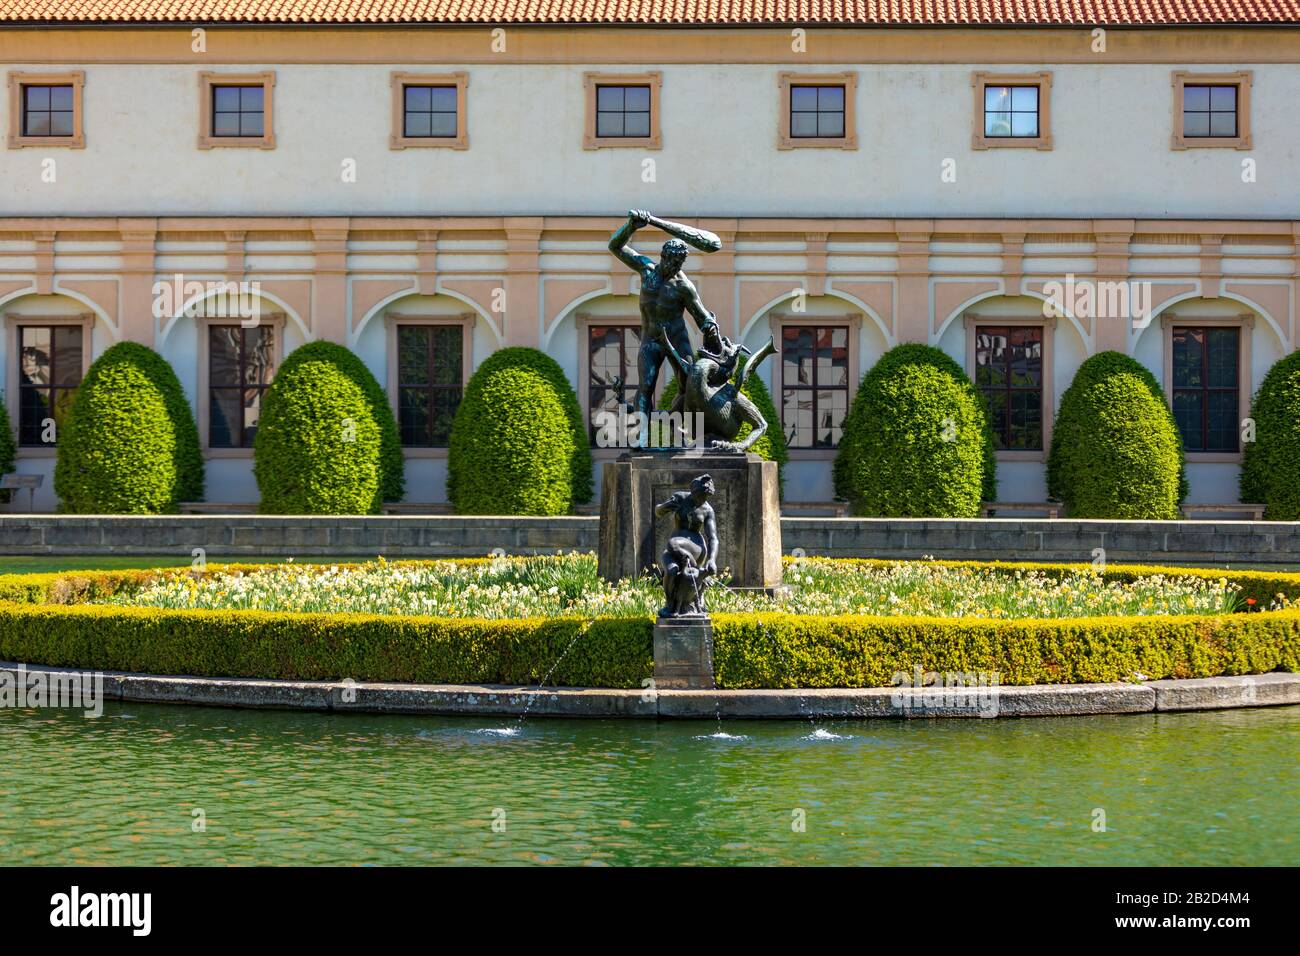 Prague, Czech Republic - 30.04.2019: Hercules statue in the middle of a pond in the Waldstein garden in Prague, Czech Republic Stock Photo